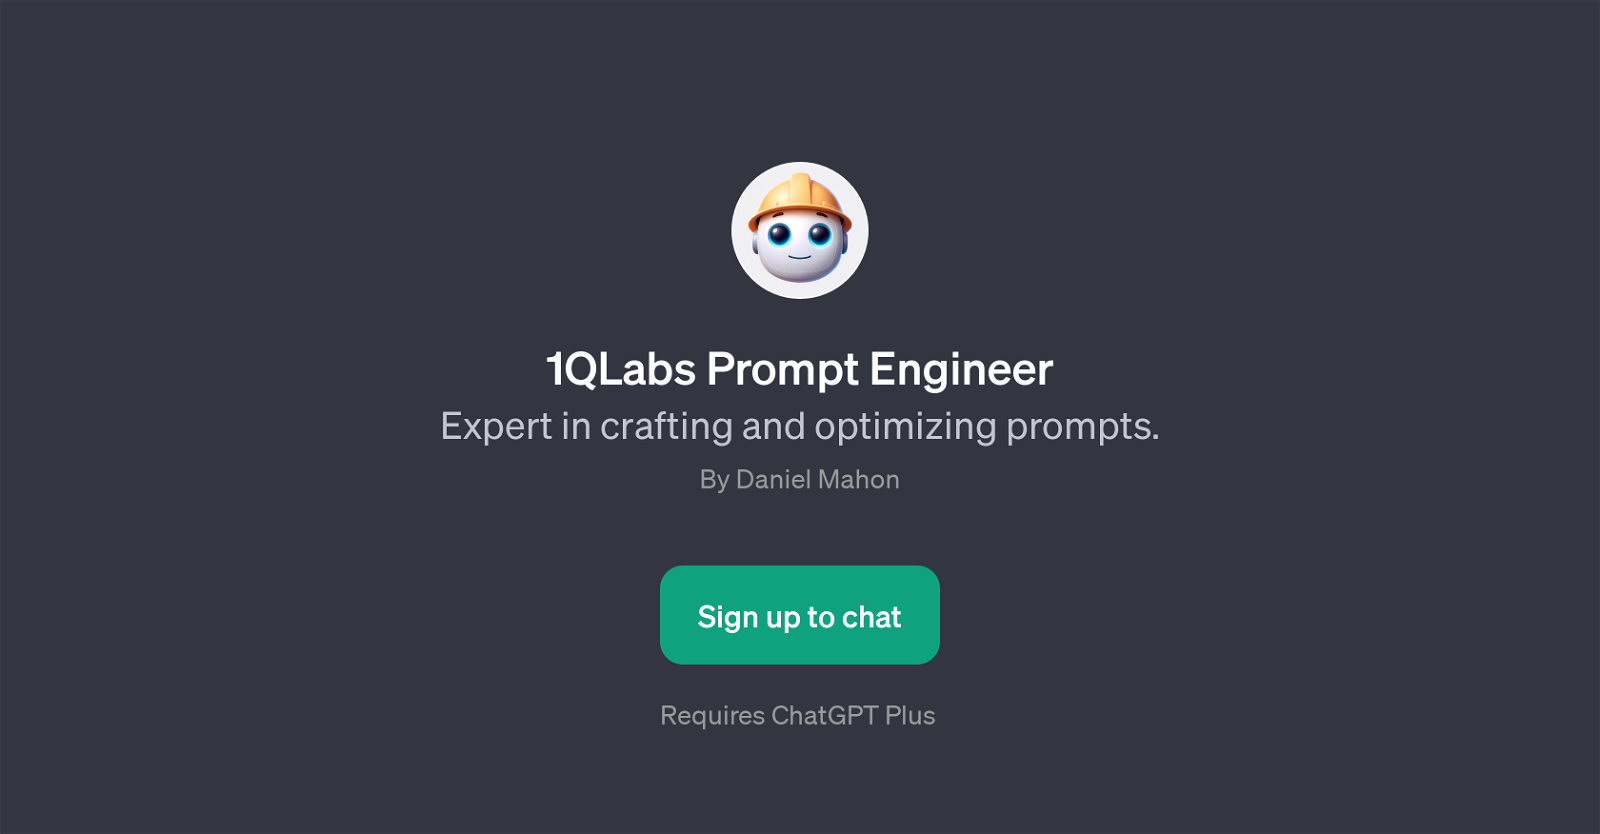 1QLabs Prompt Engineer website